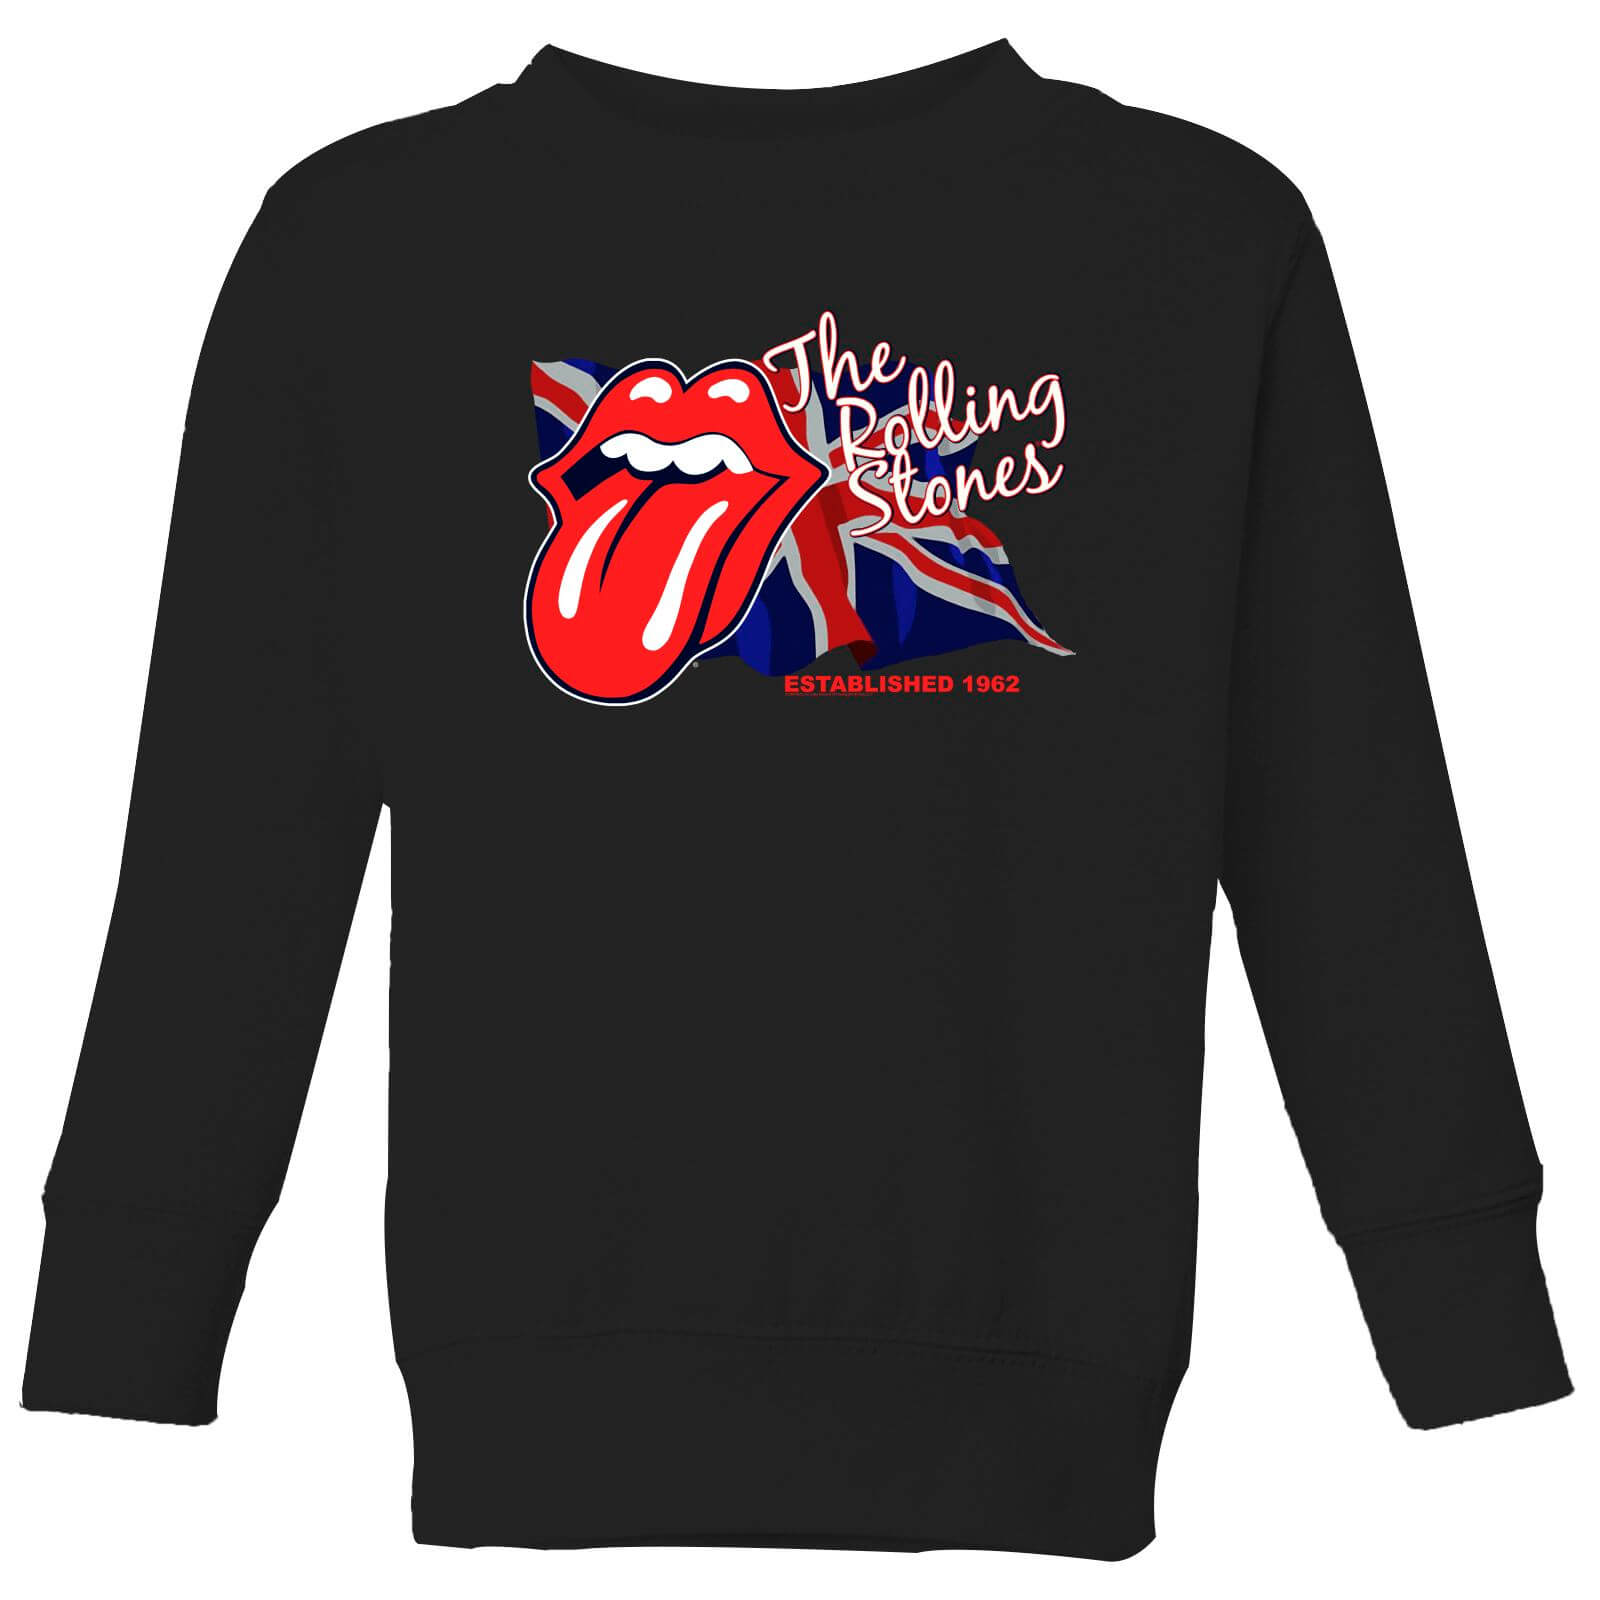 Rolling Stones Lick The Flag Kids' Sweatshirt - Black - 7-8 Years - Black